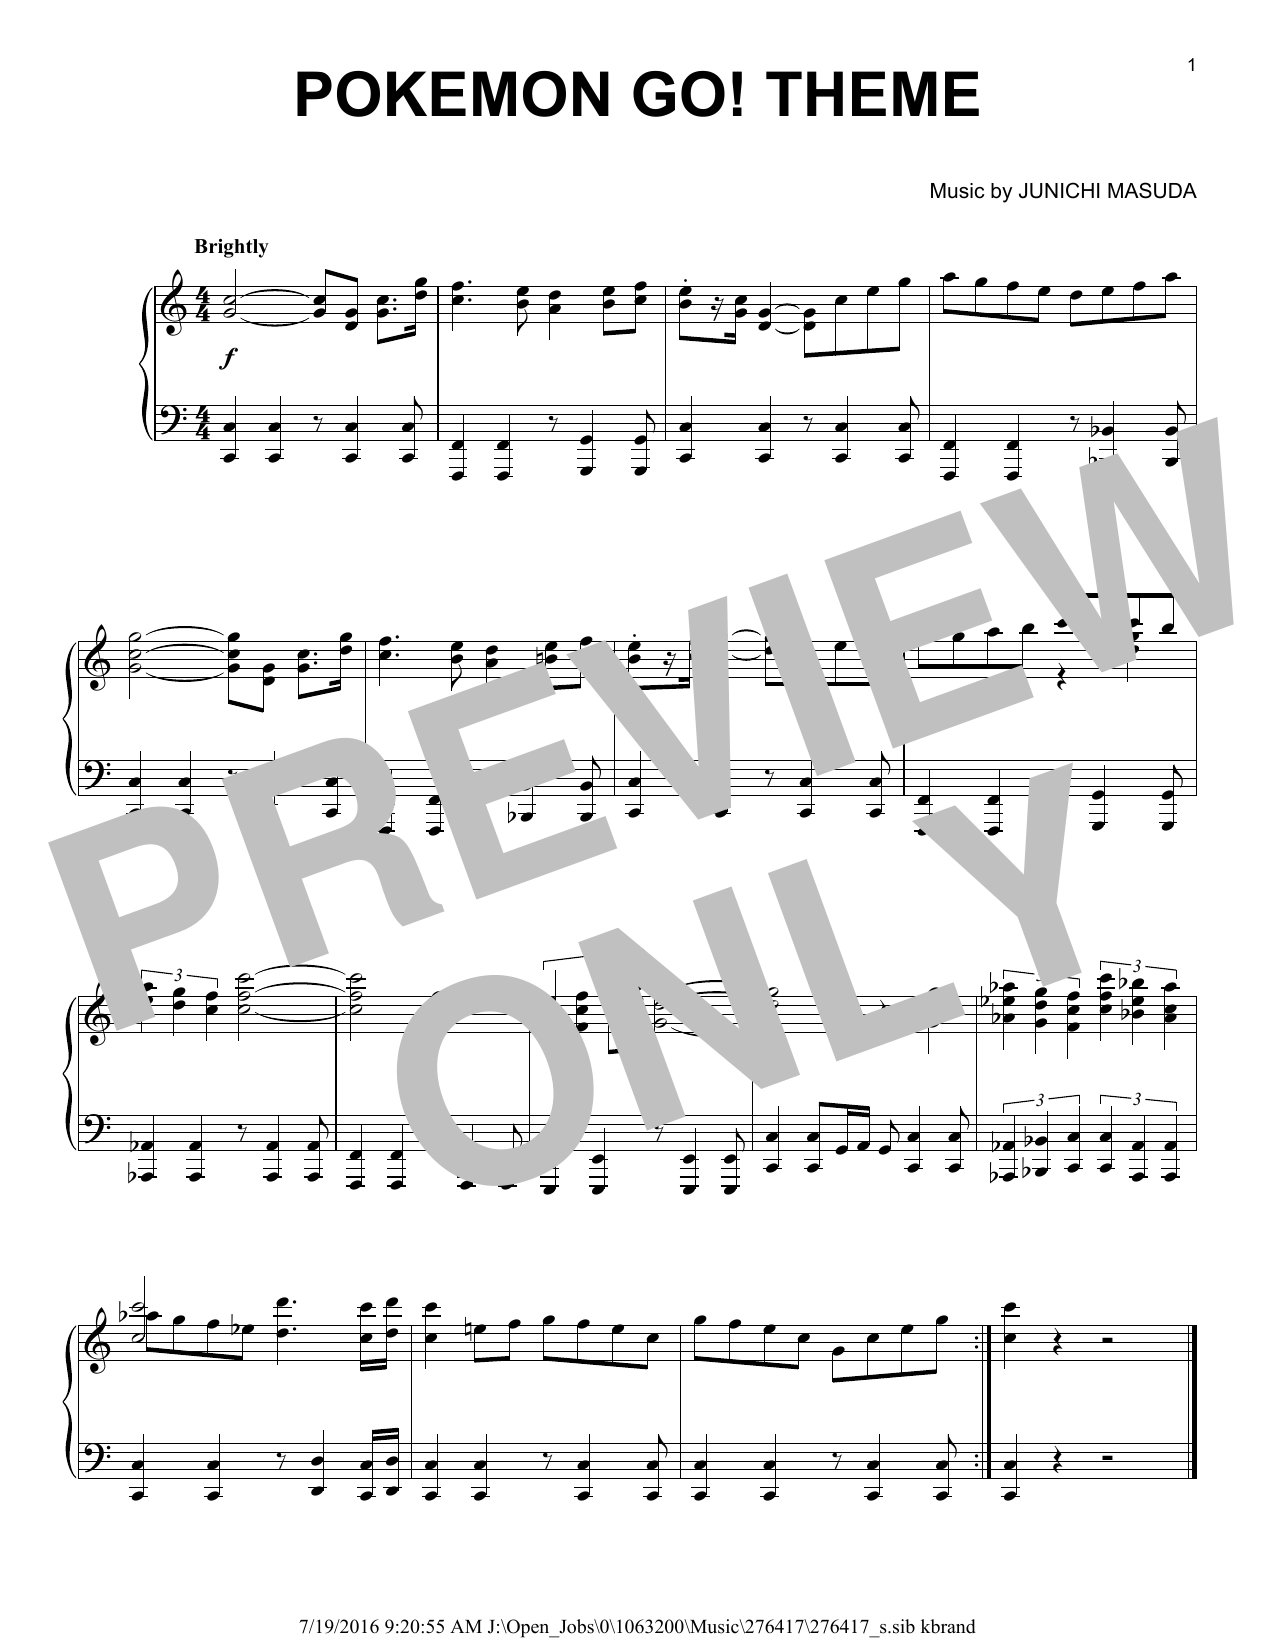 Junichi Masuda Pokemon Go! Theme Sheet Music Notes & Chords for Piano - Download or Print PDF